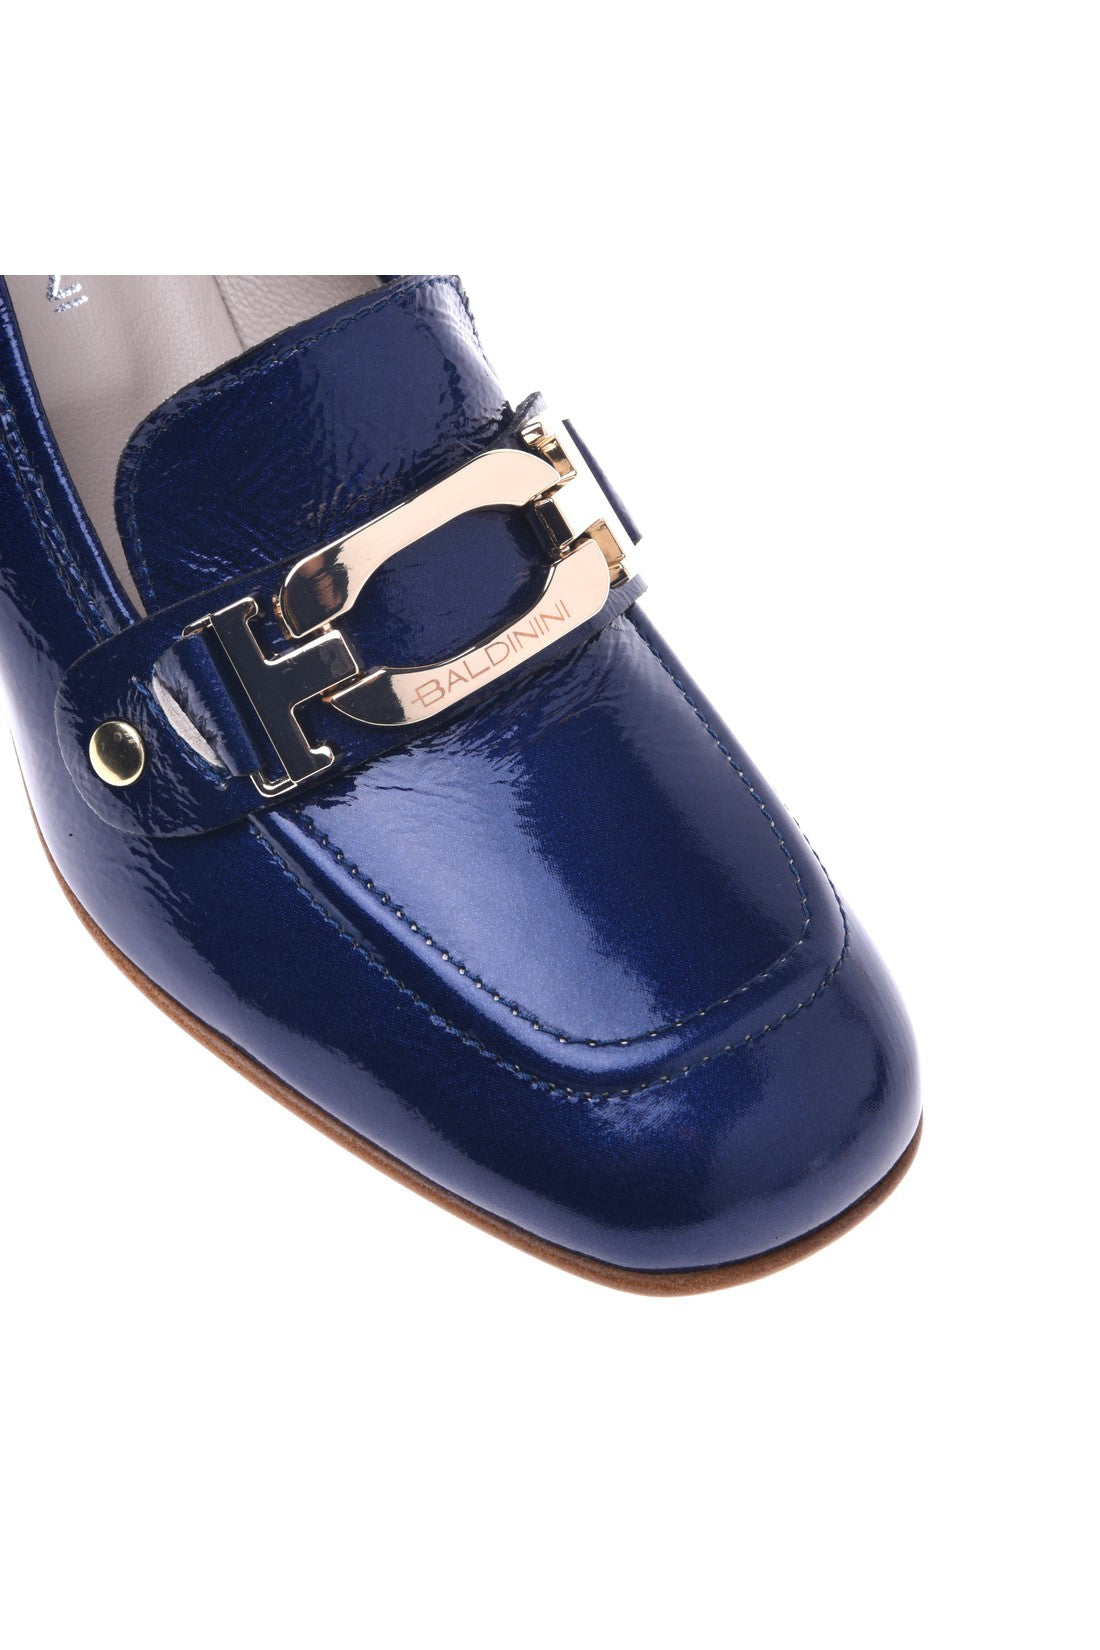 Loafer in blue naplak leather